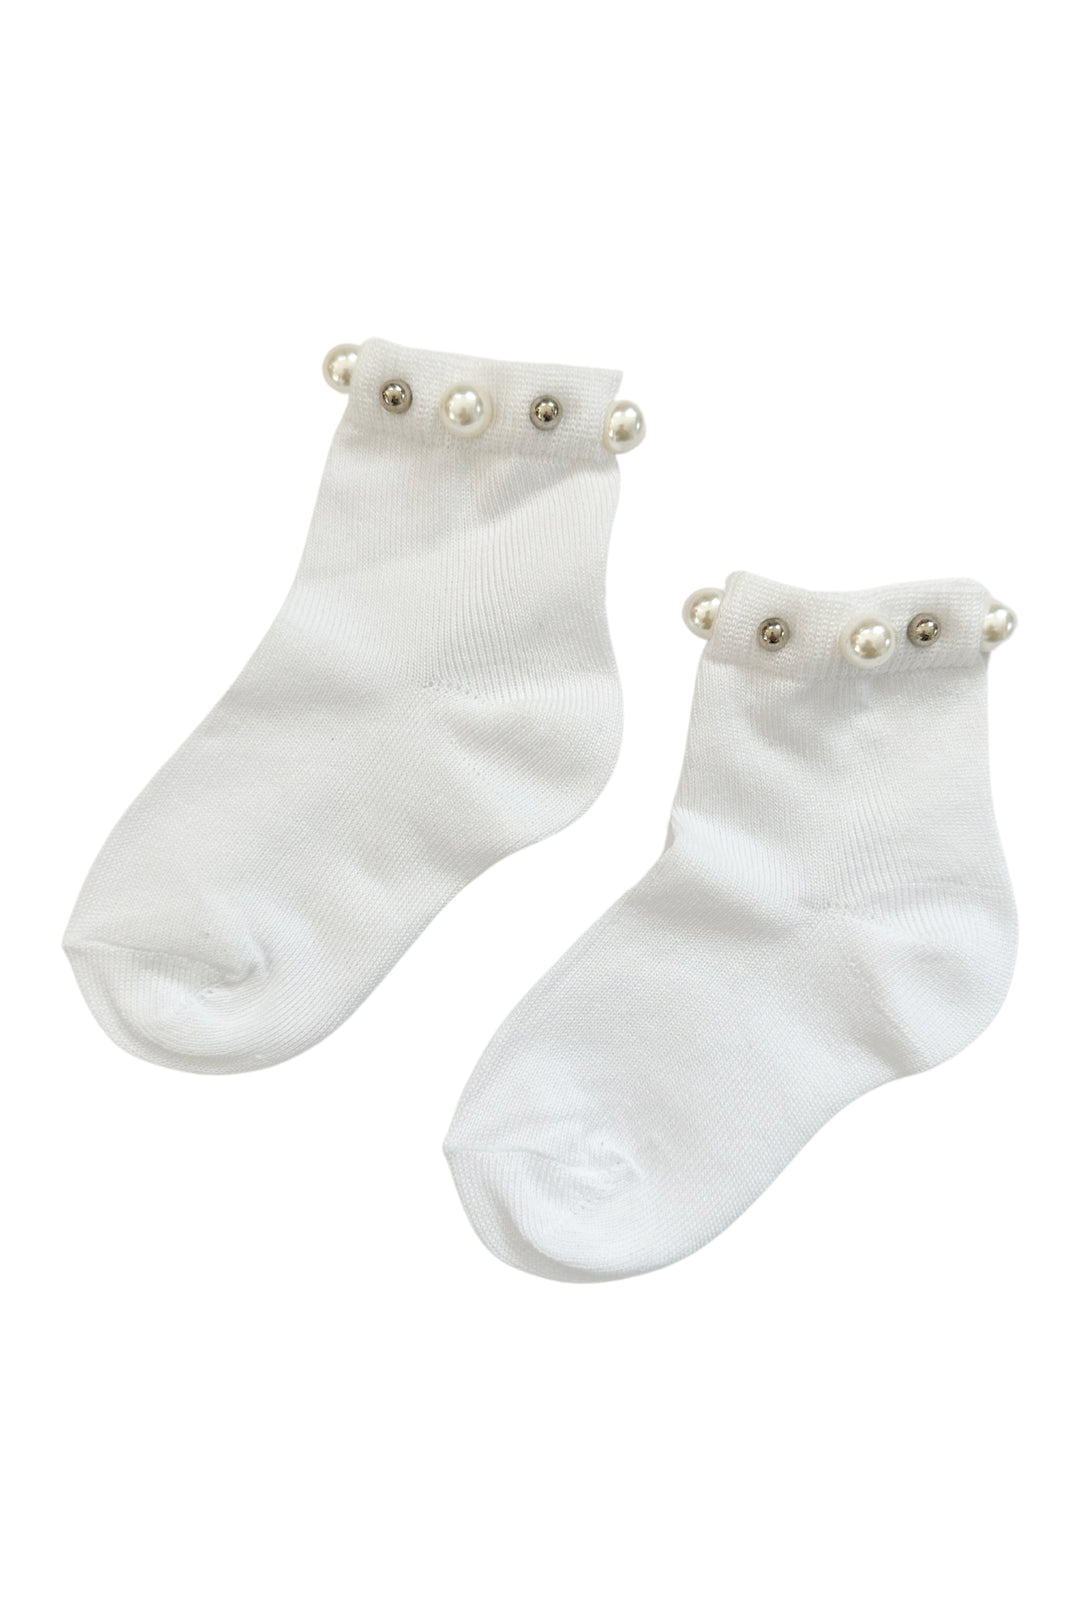 Meia Pata White Pearl Ankle Socks | Millie and John